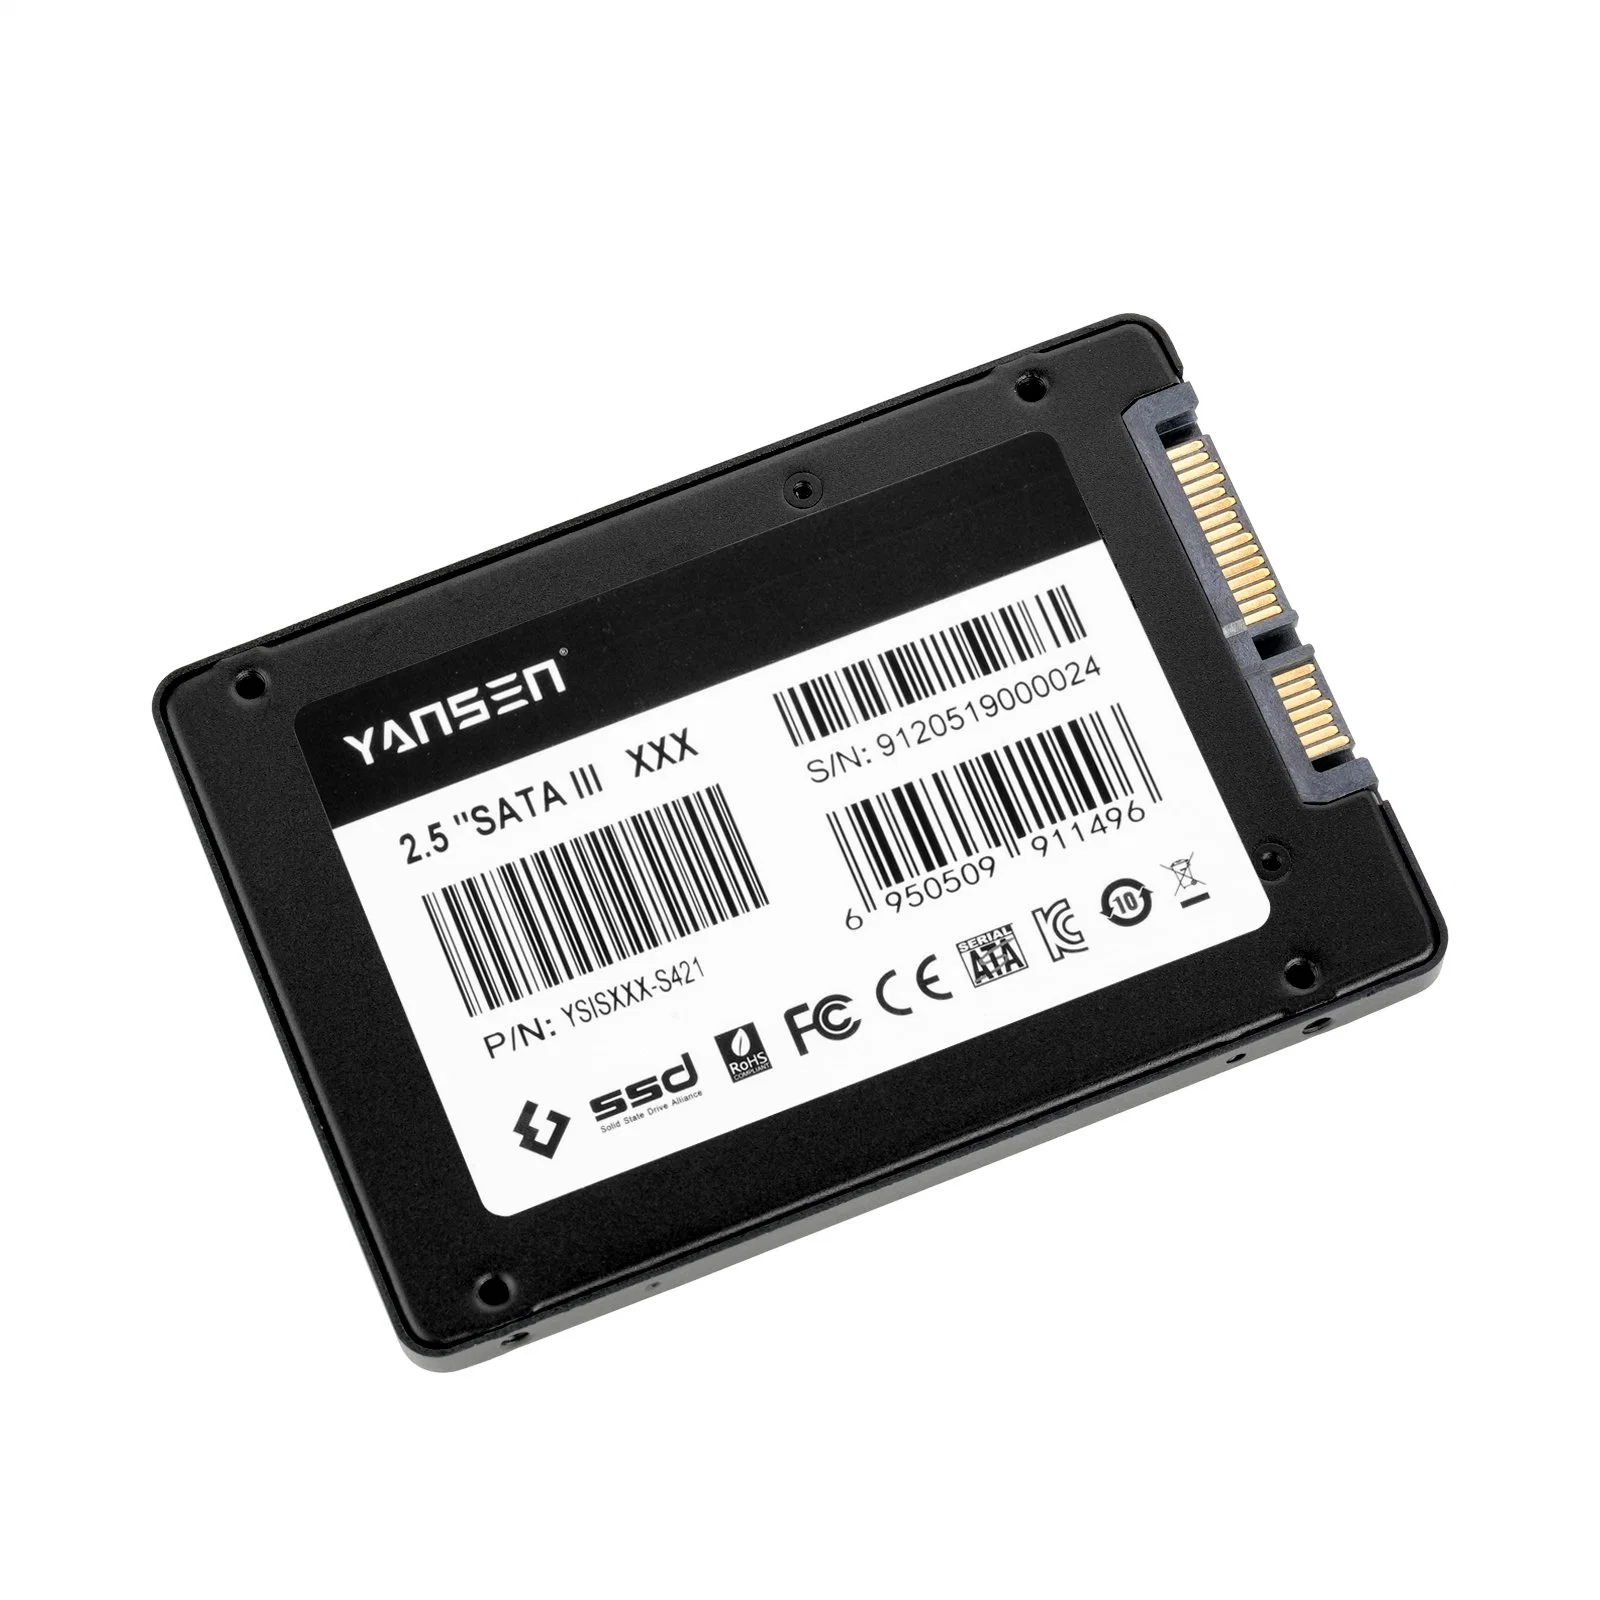 Yansen High Durability High Capacity 2.5 Inch SATA SSD for Embeded Applications 128GB-1tb SSD